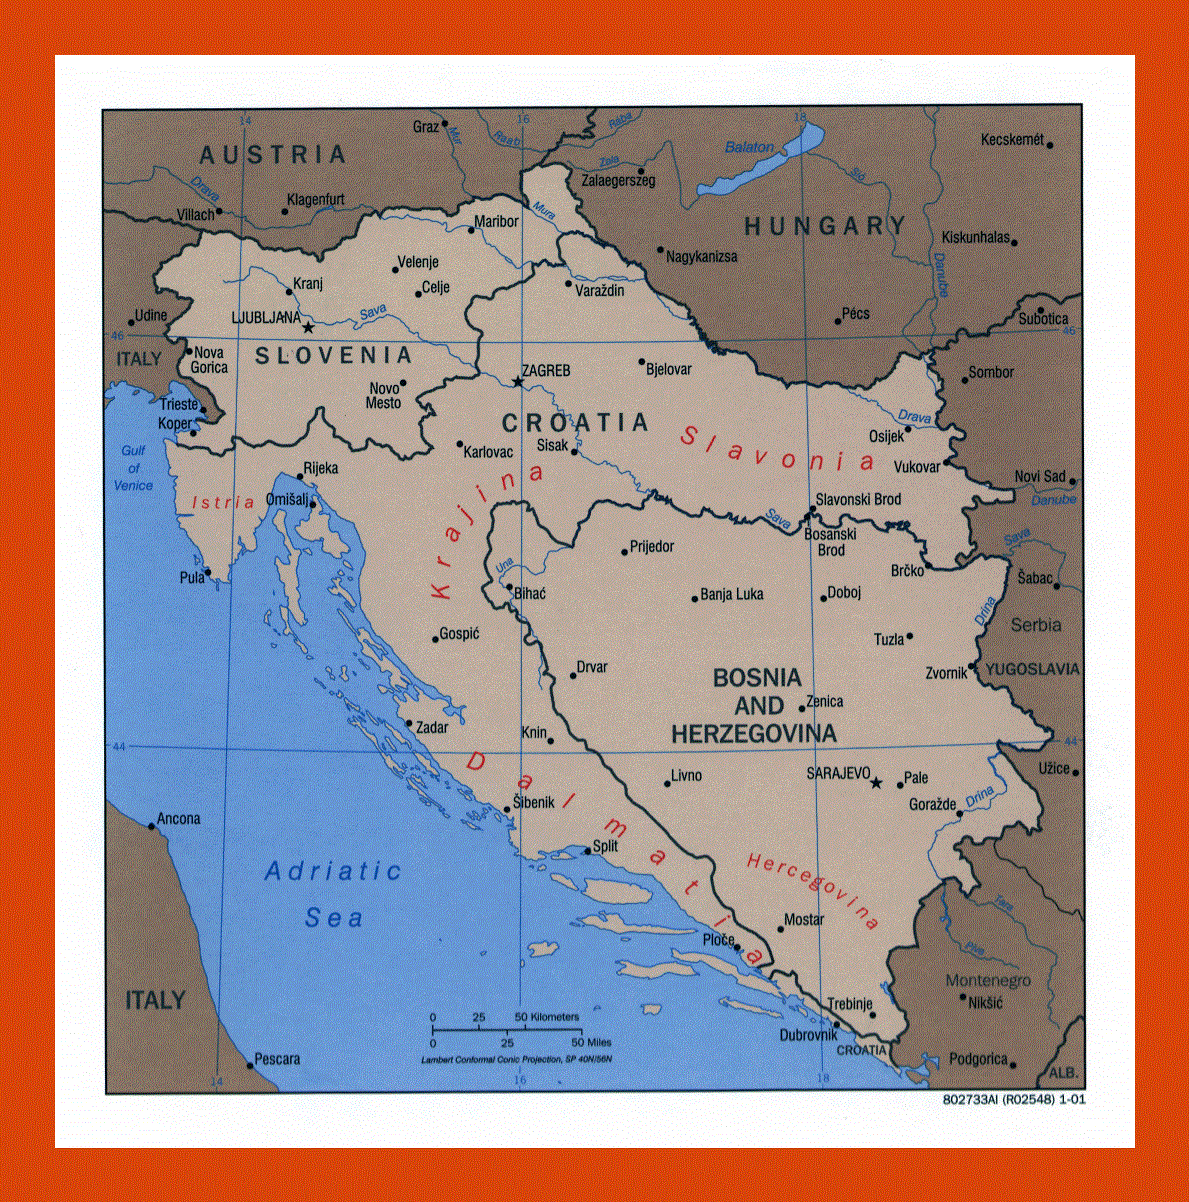 Political map of the Western Former Yugoslav Republics - 2001